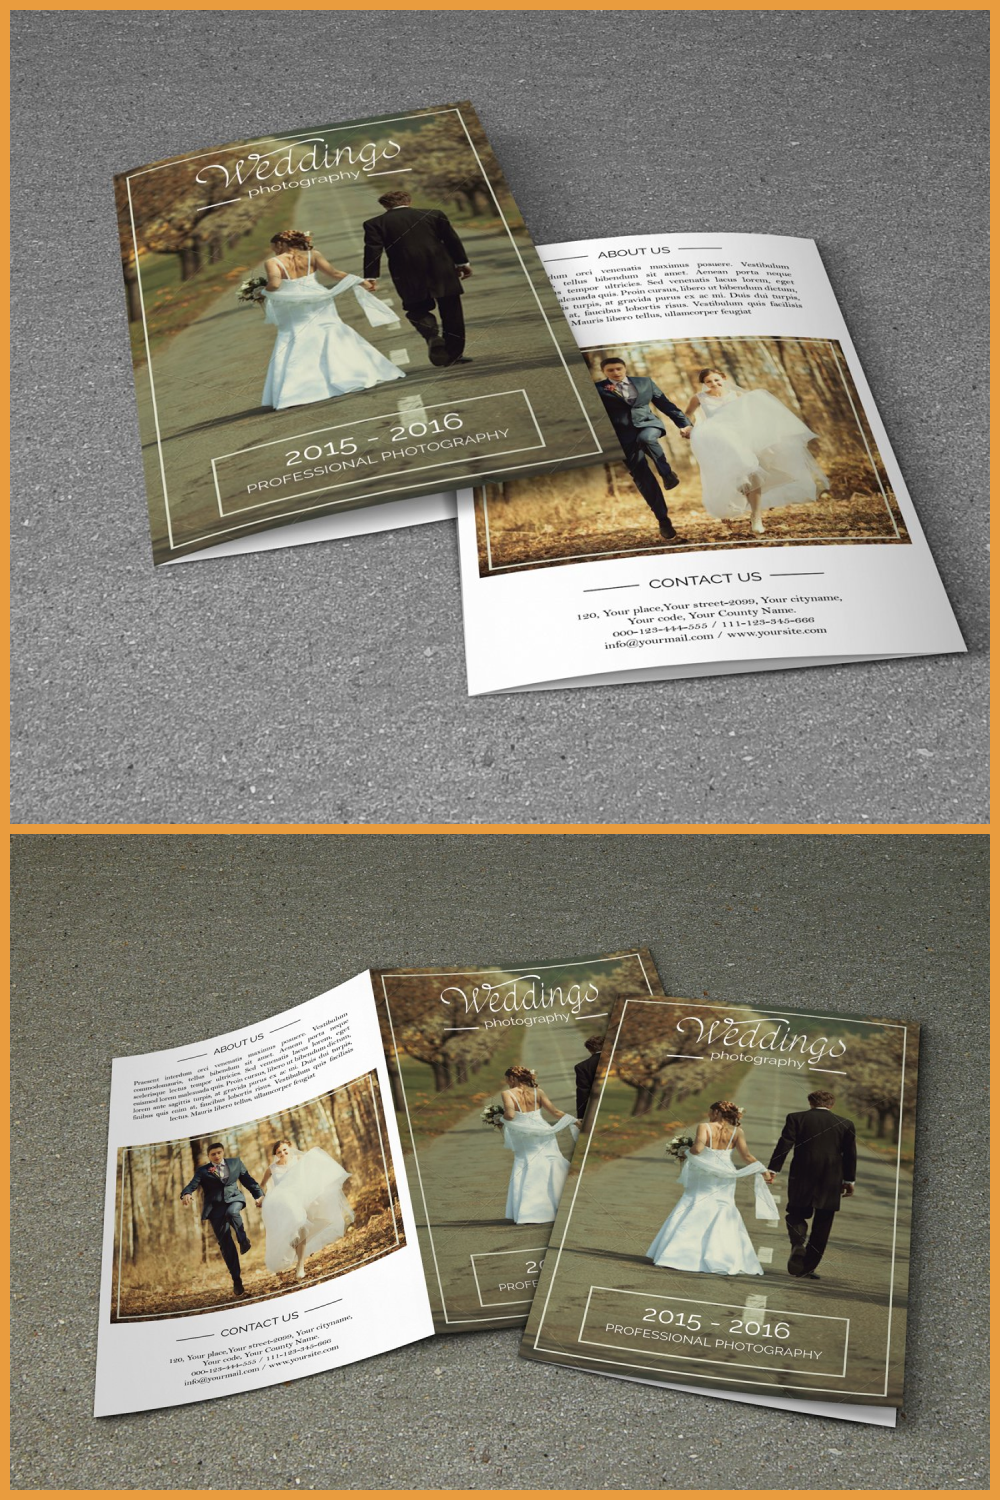 Wedding photography brochure of pinterest.